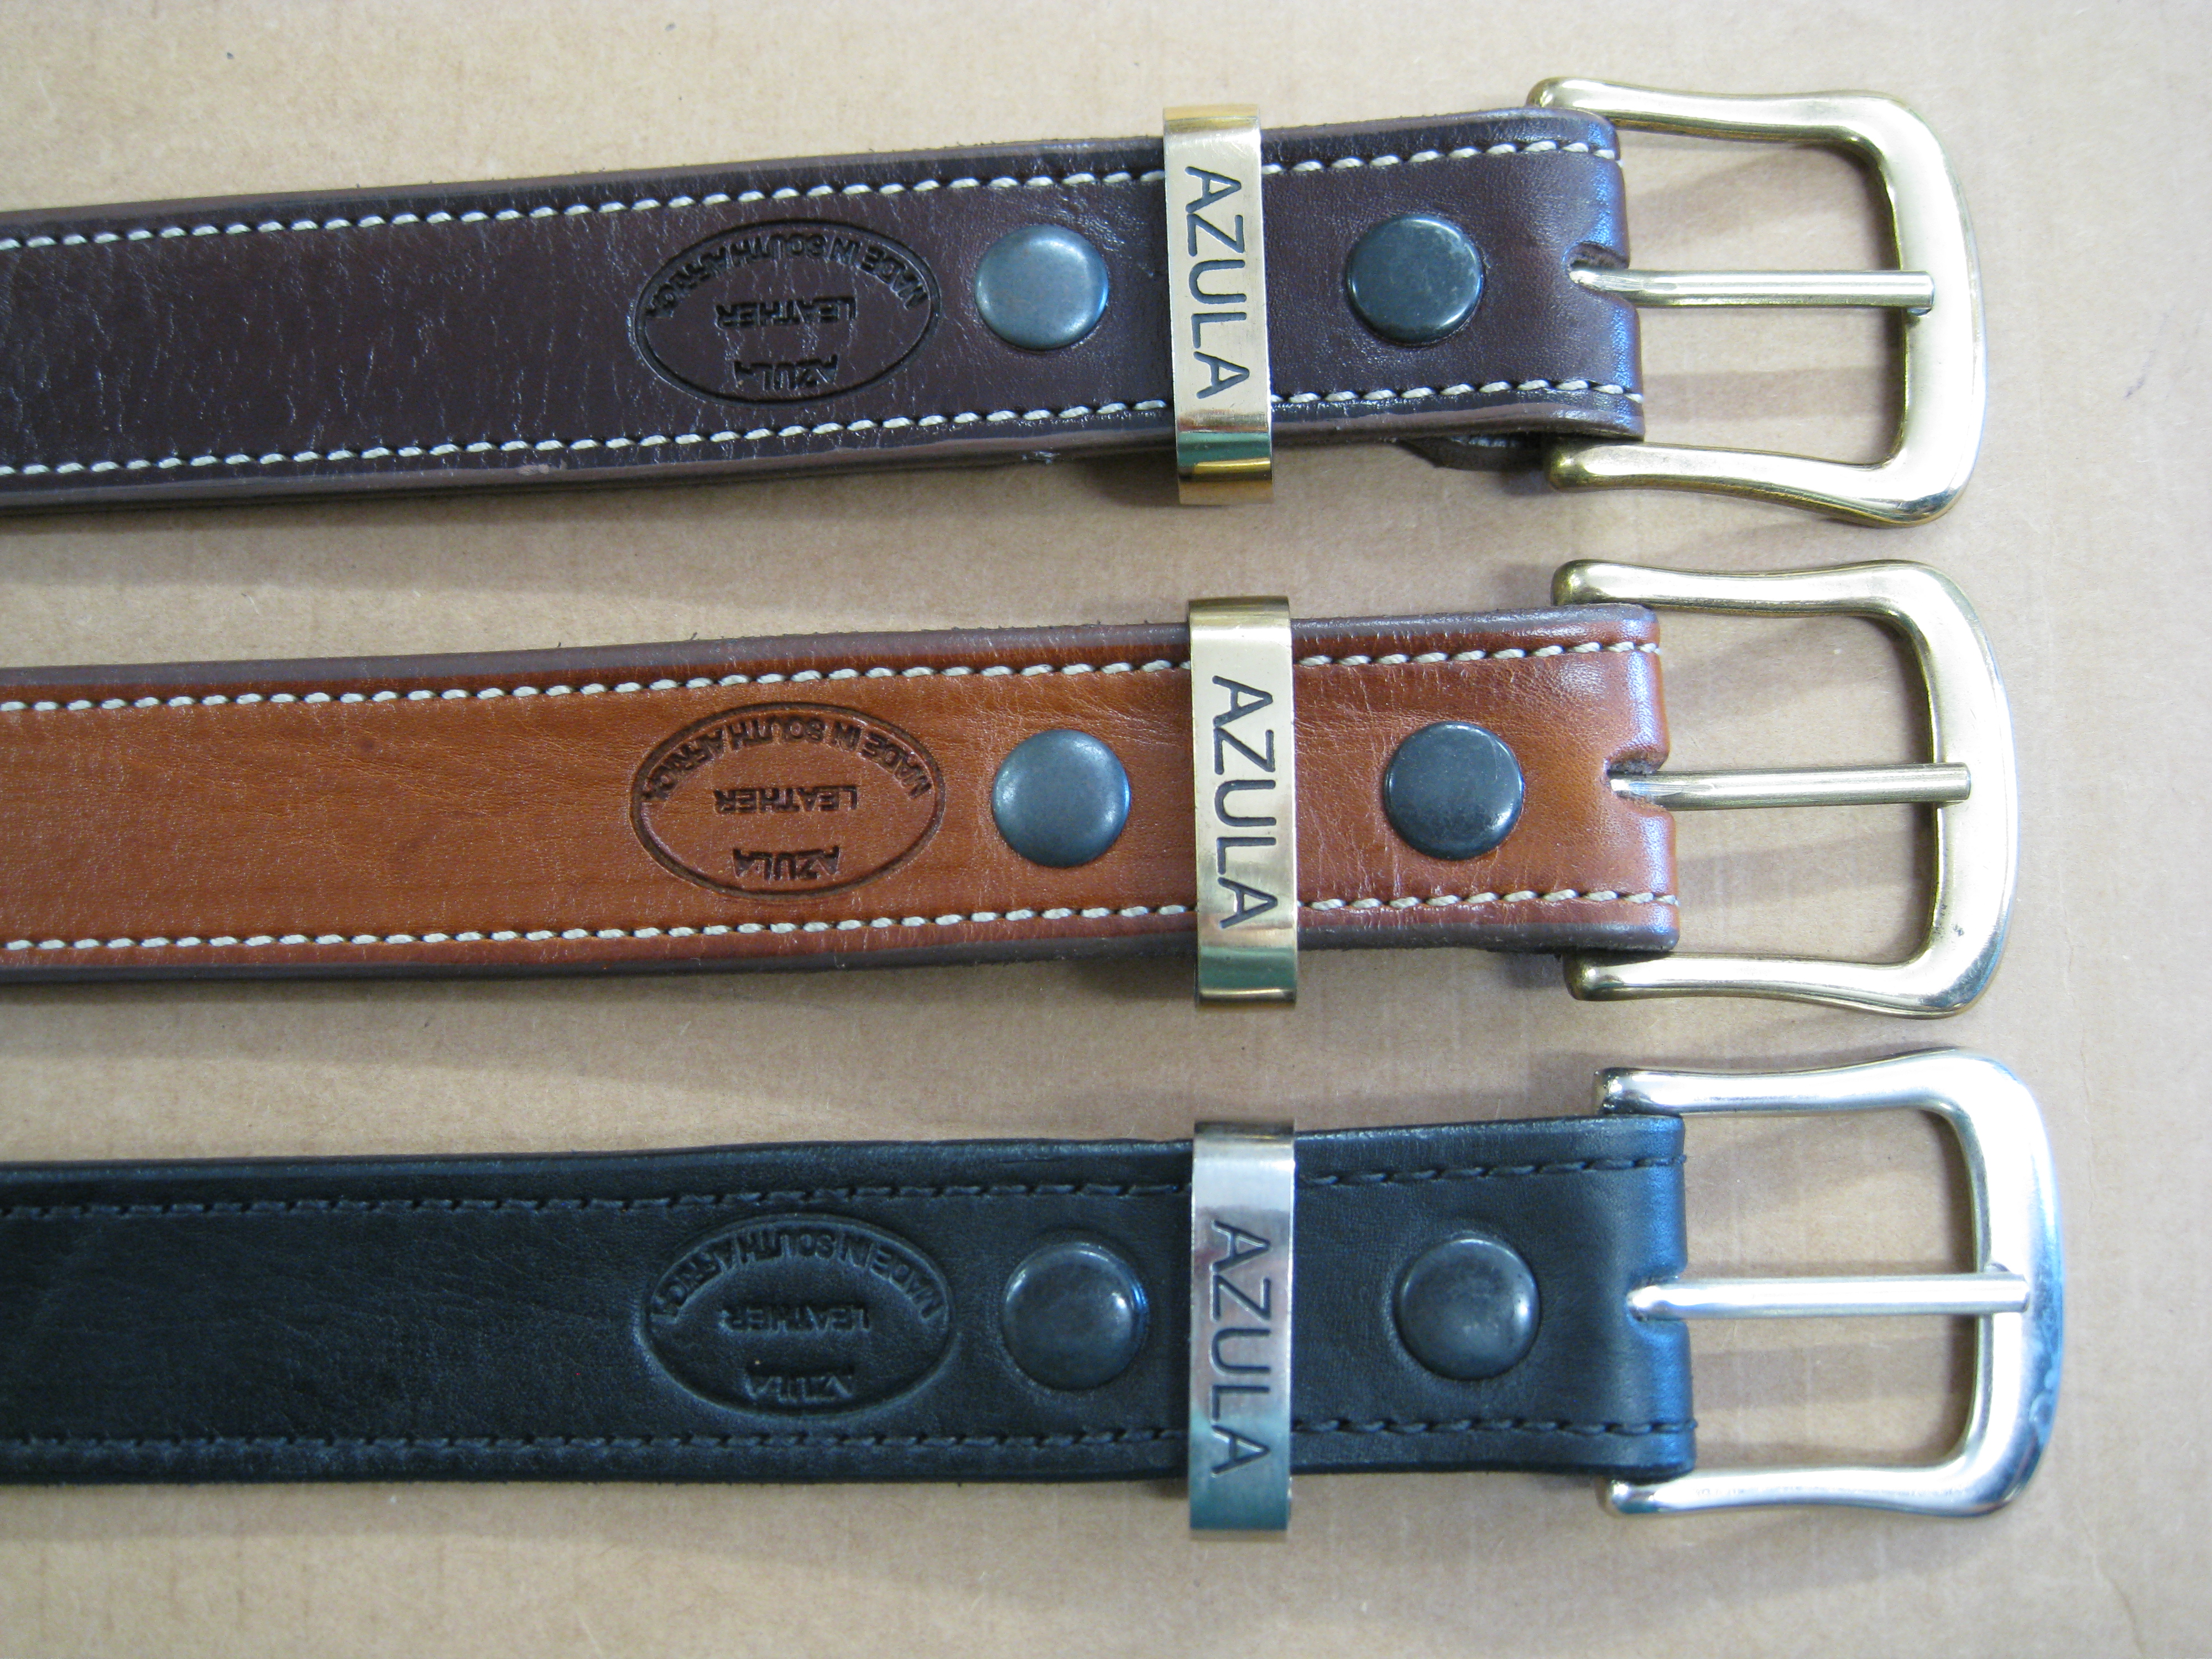 37inch Simple Joker Waist Belt/Decorative Pin Buckle Belts-B 95cm